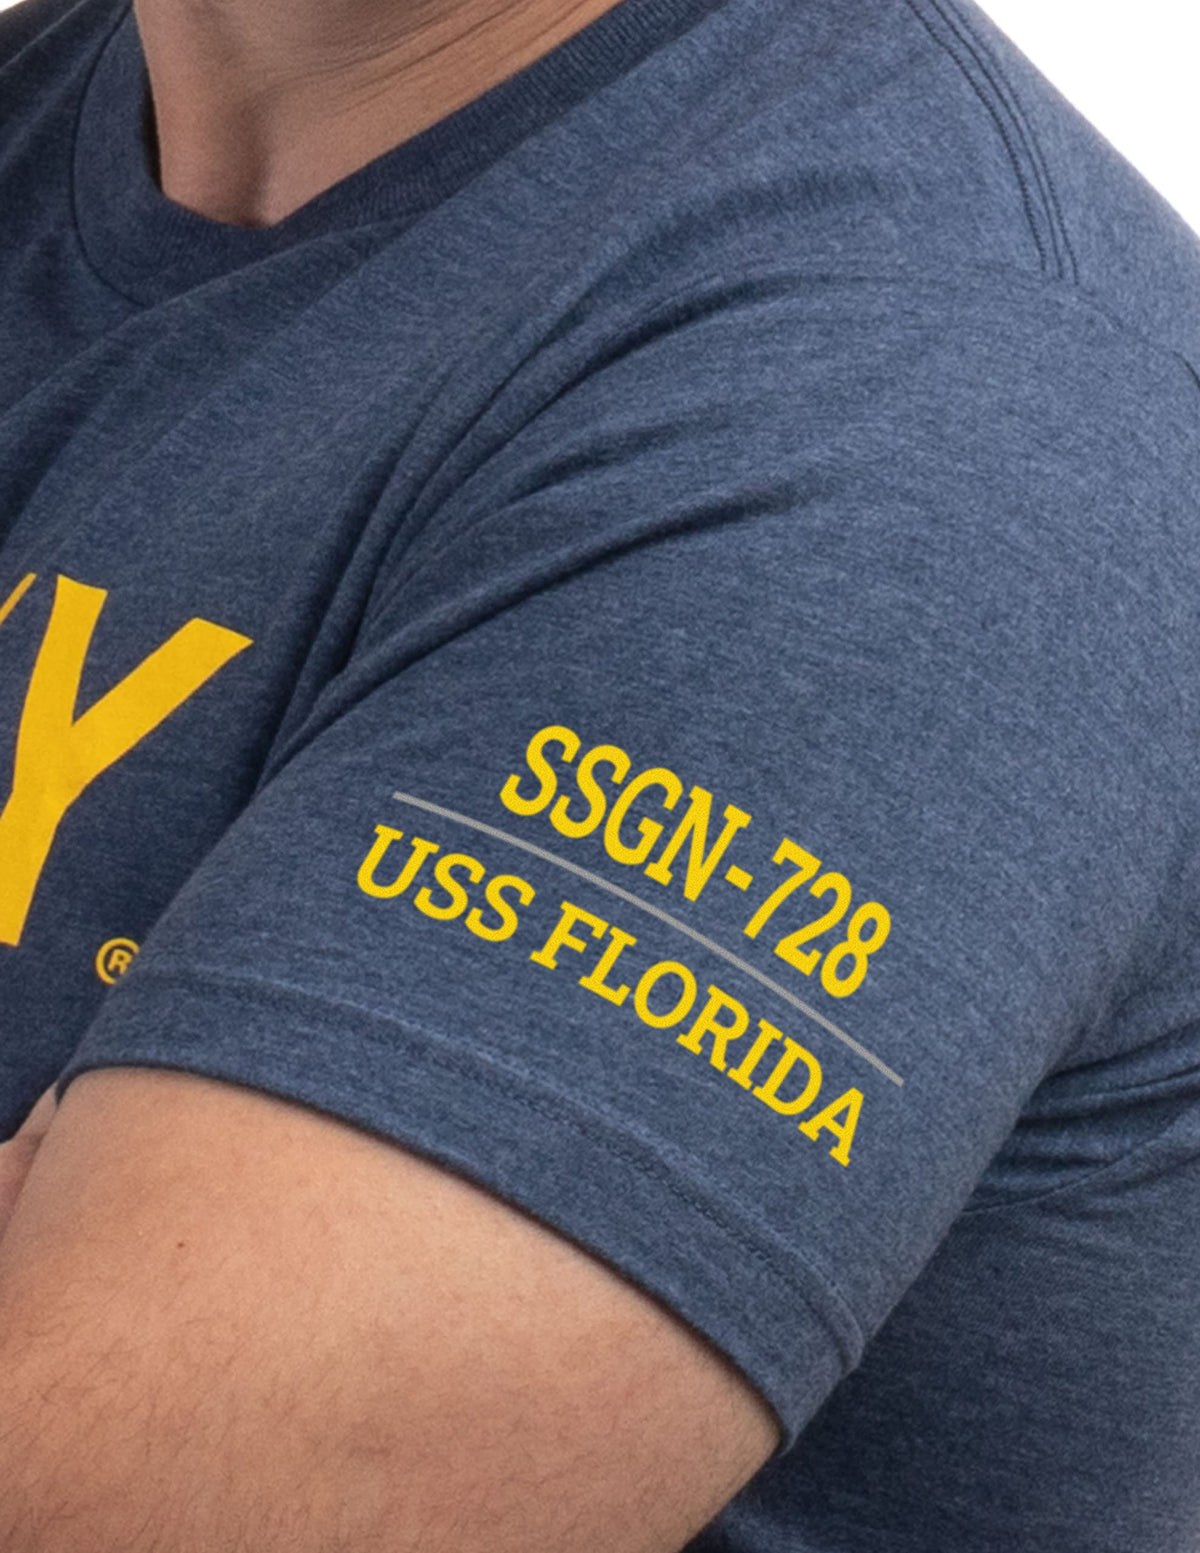 USS Florida, SSGN-728 | U.S. Navy Sailor Veteran USN United States Naval T-shirt for Men Women